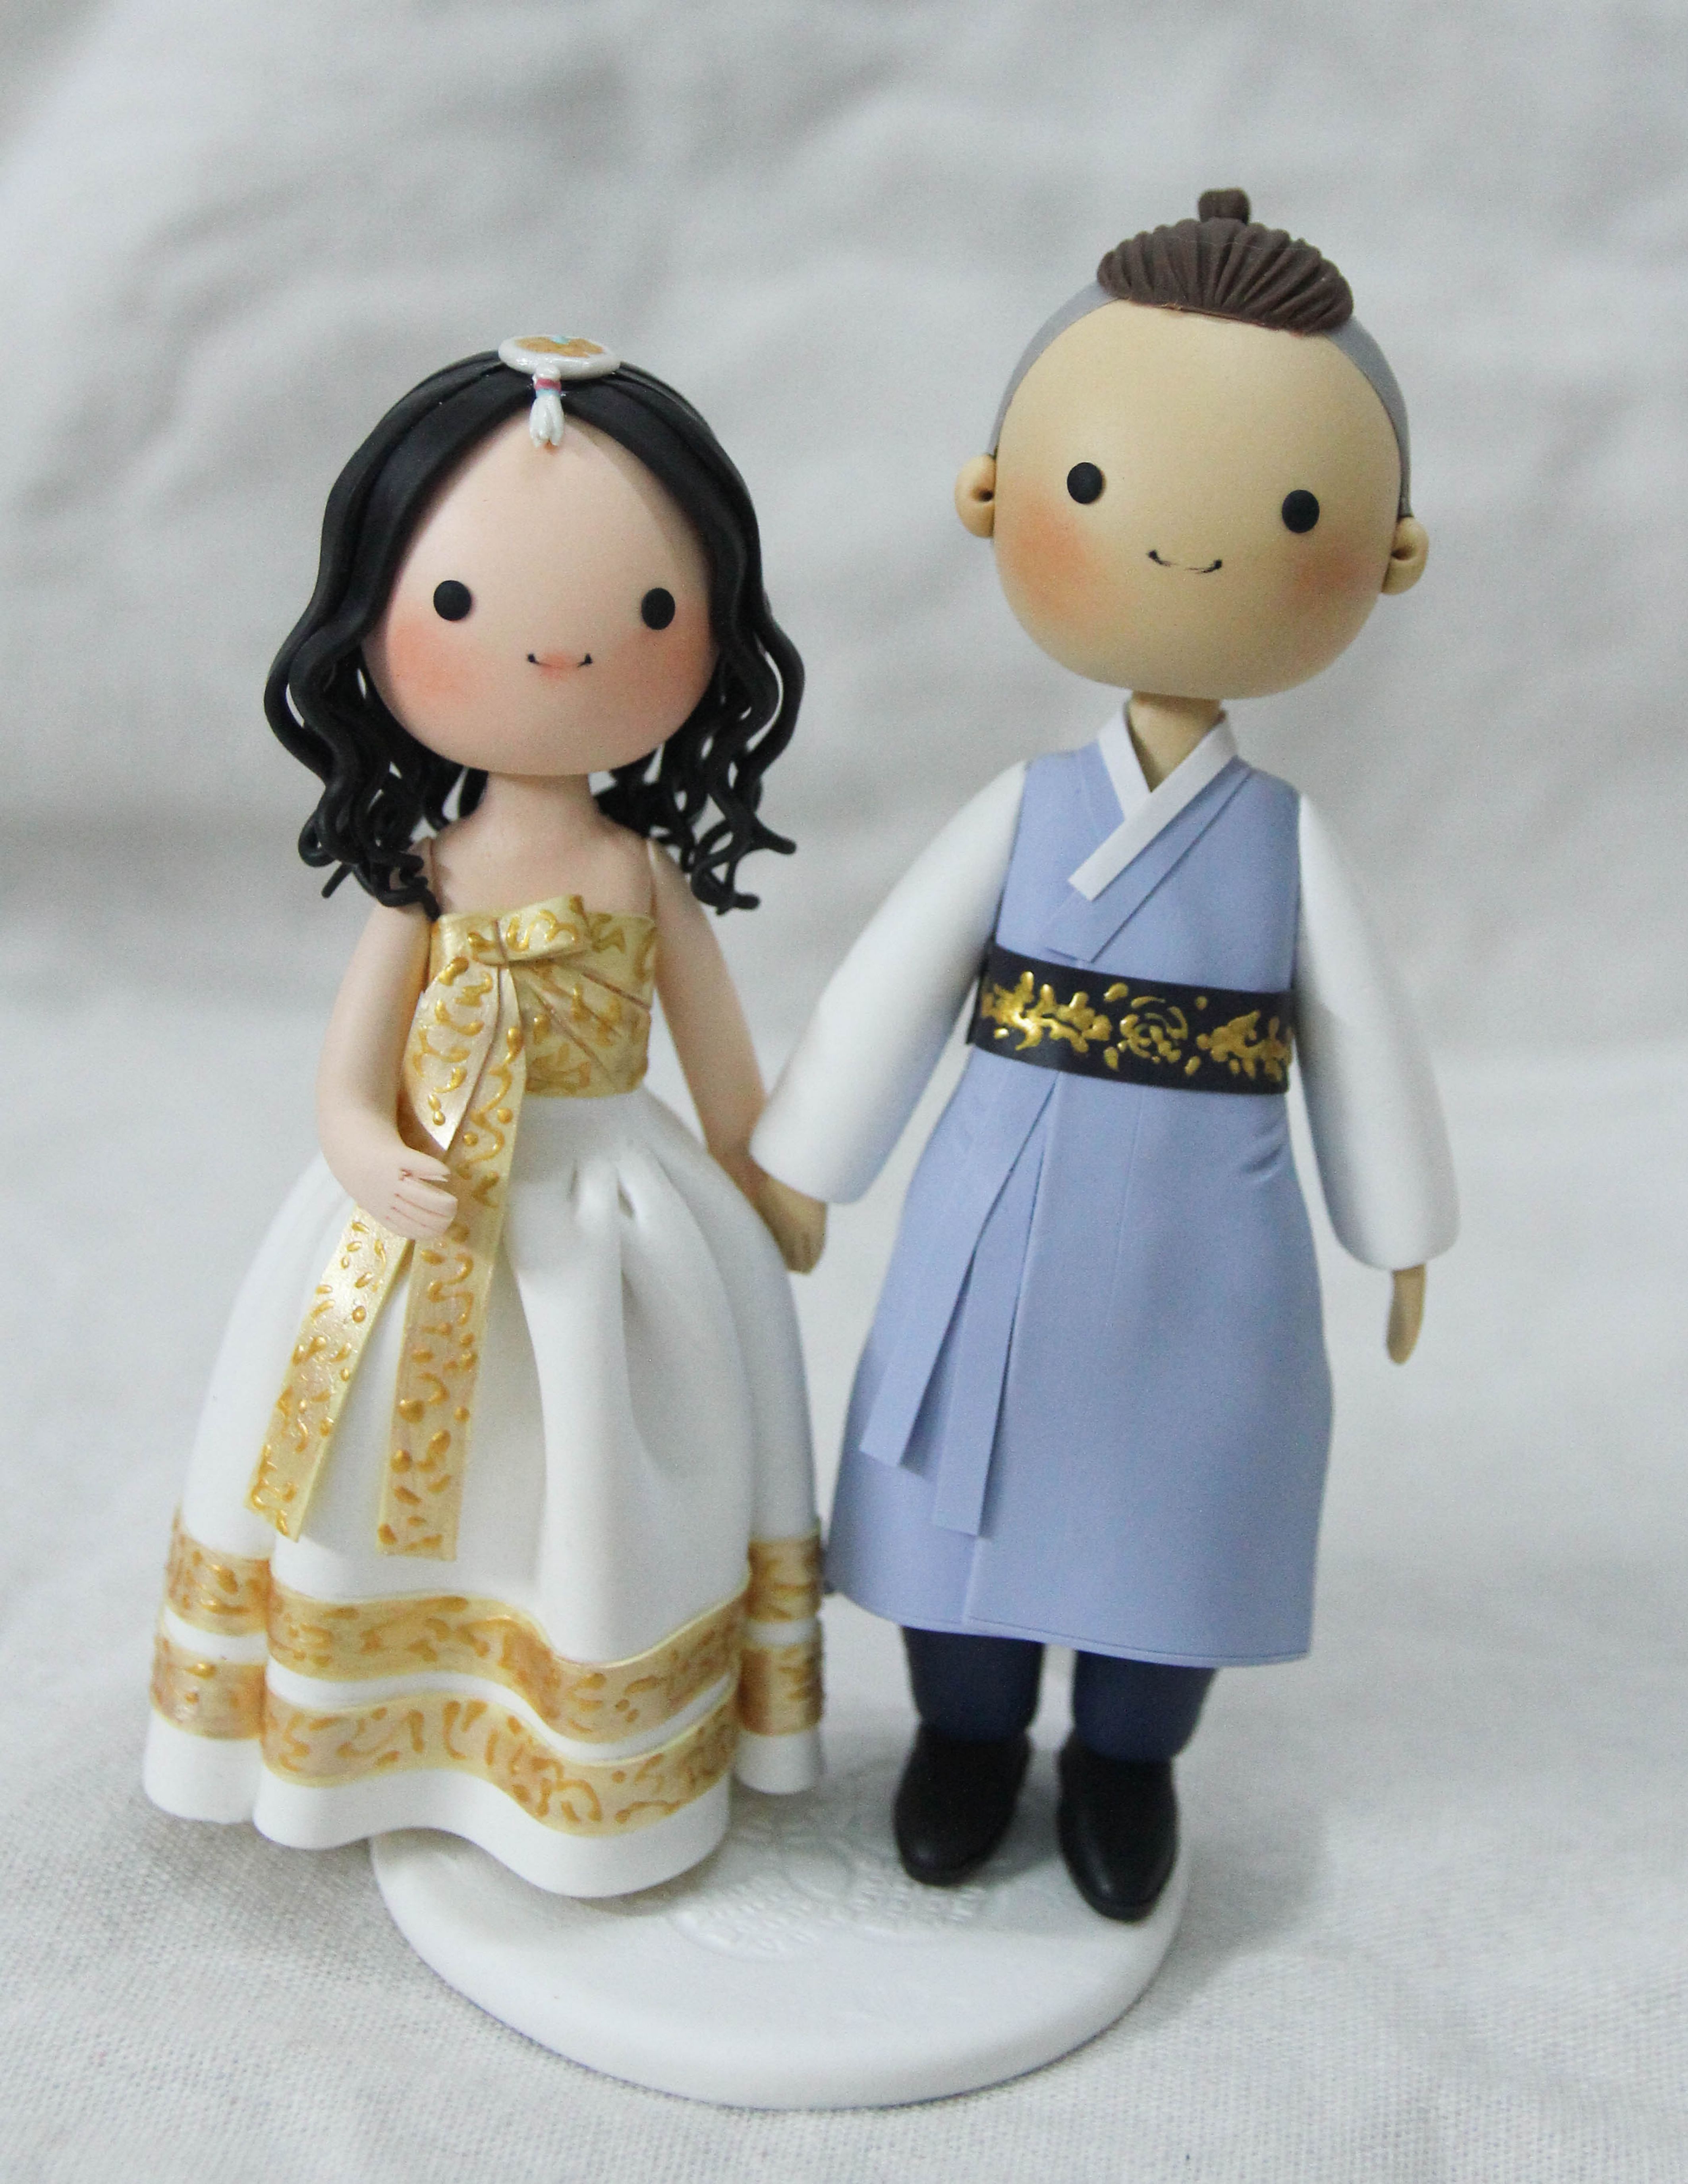 Picture of Hanbok wedding cake topper, Korea wedding cake topper, Korean Bride & Groom cake topper, Gold and Blue wedding theme